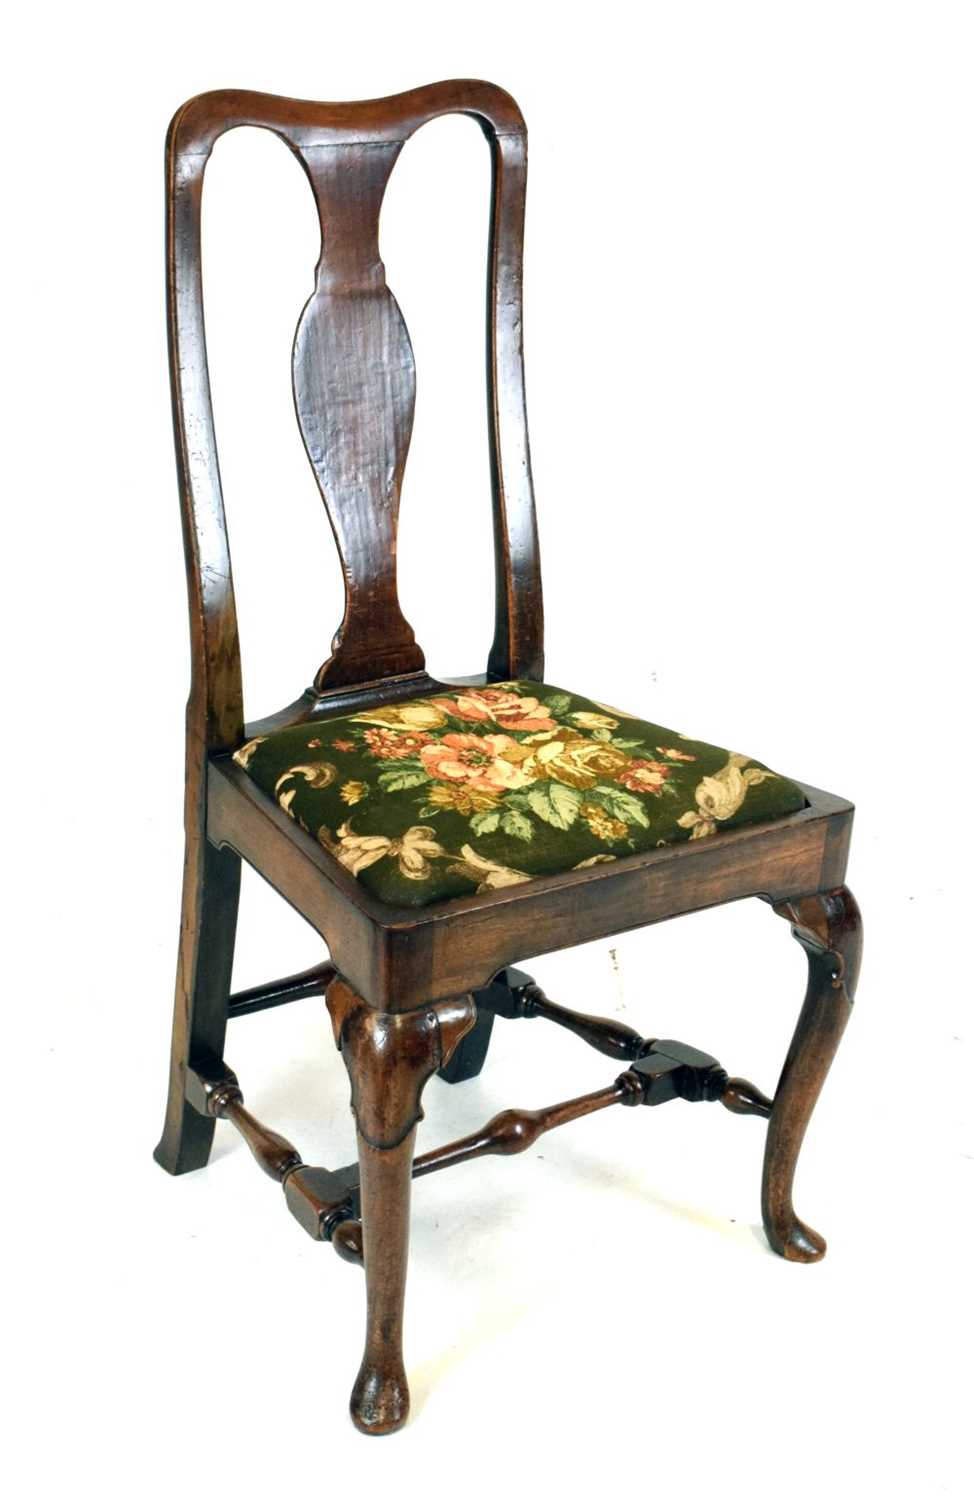 Queen Anne walnut splat back chair